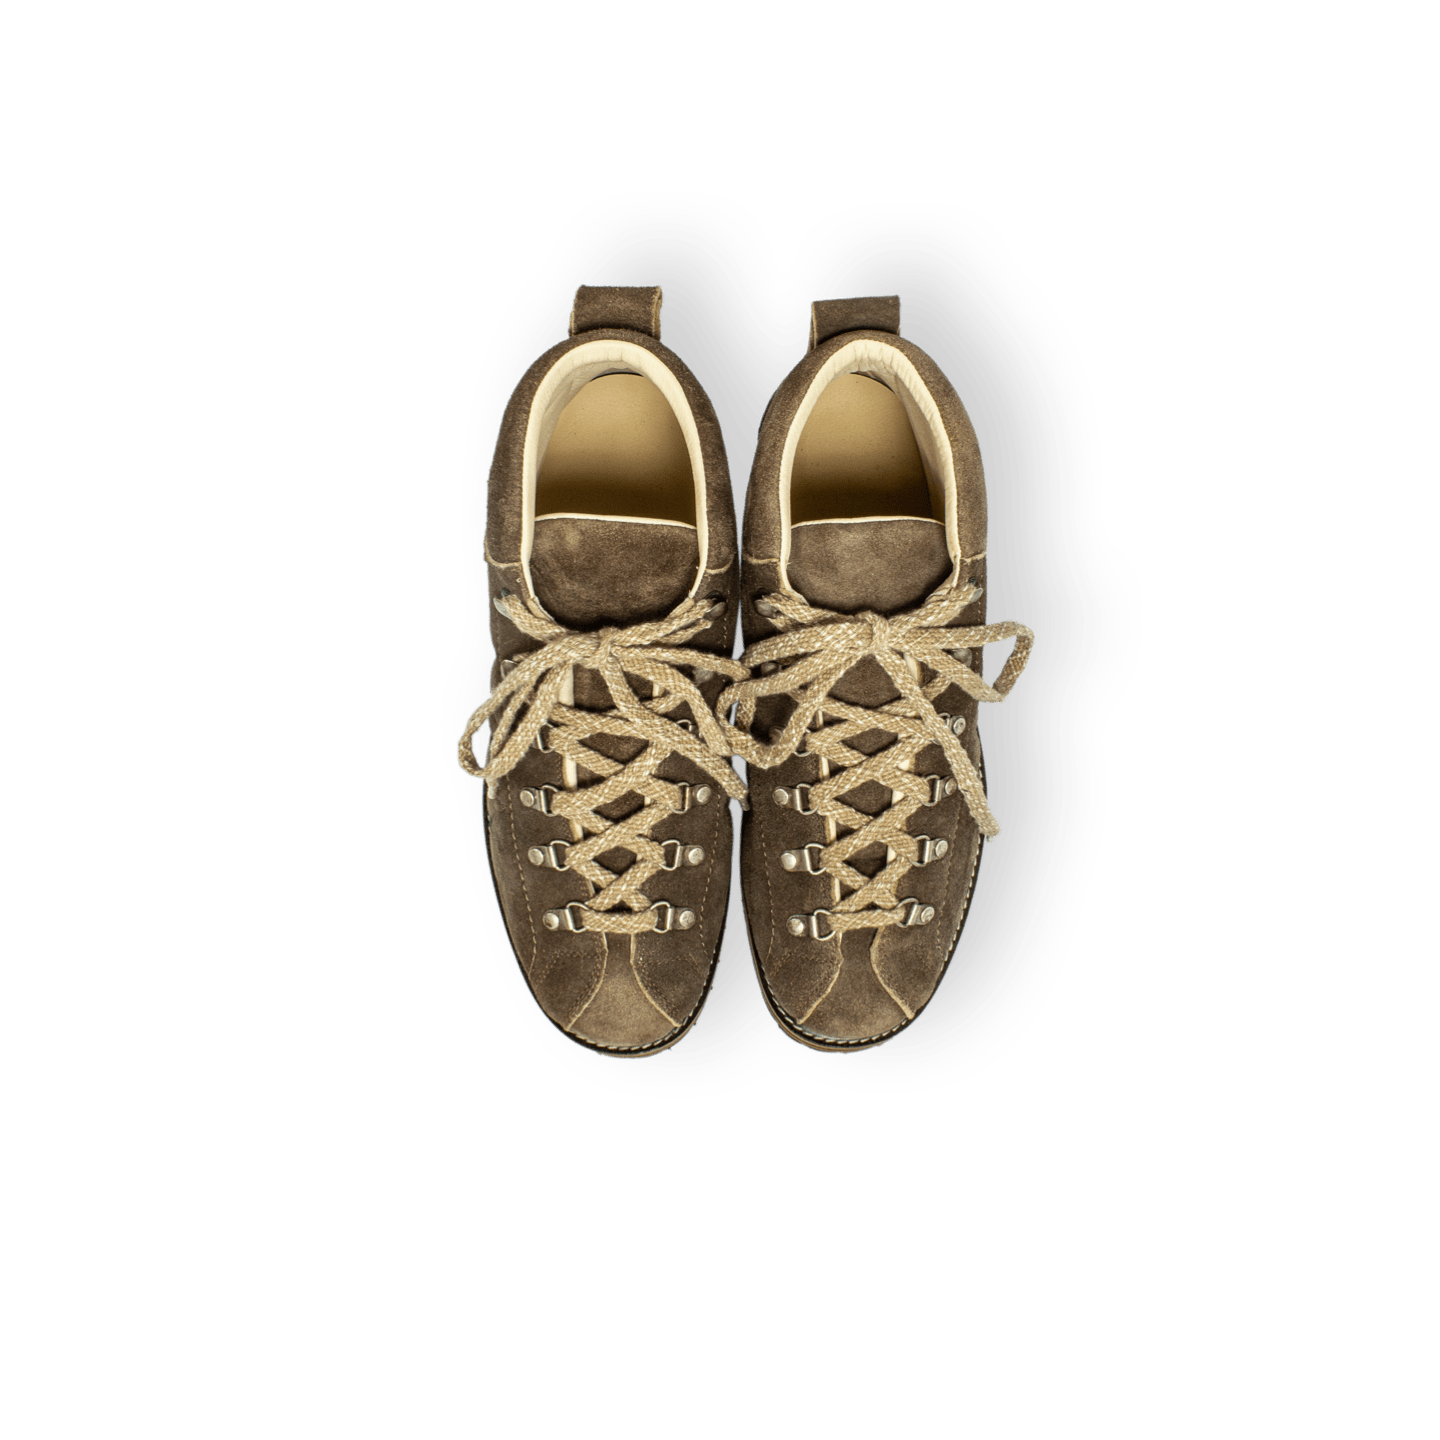 Strizi Lederschuh 5 - Strizi Leather shoe